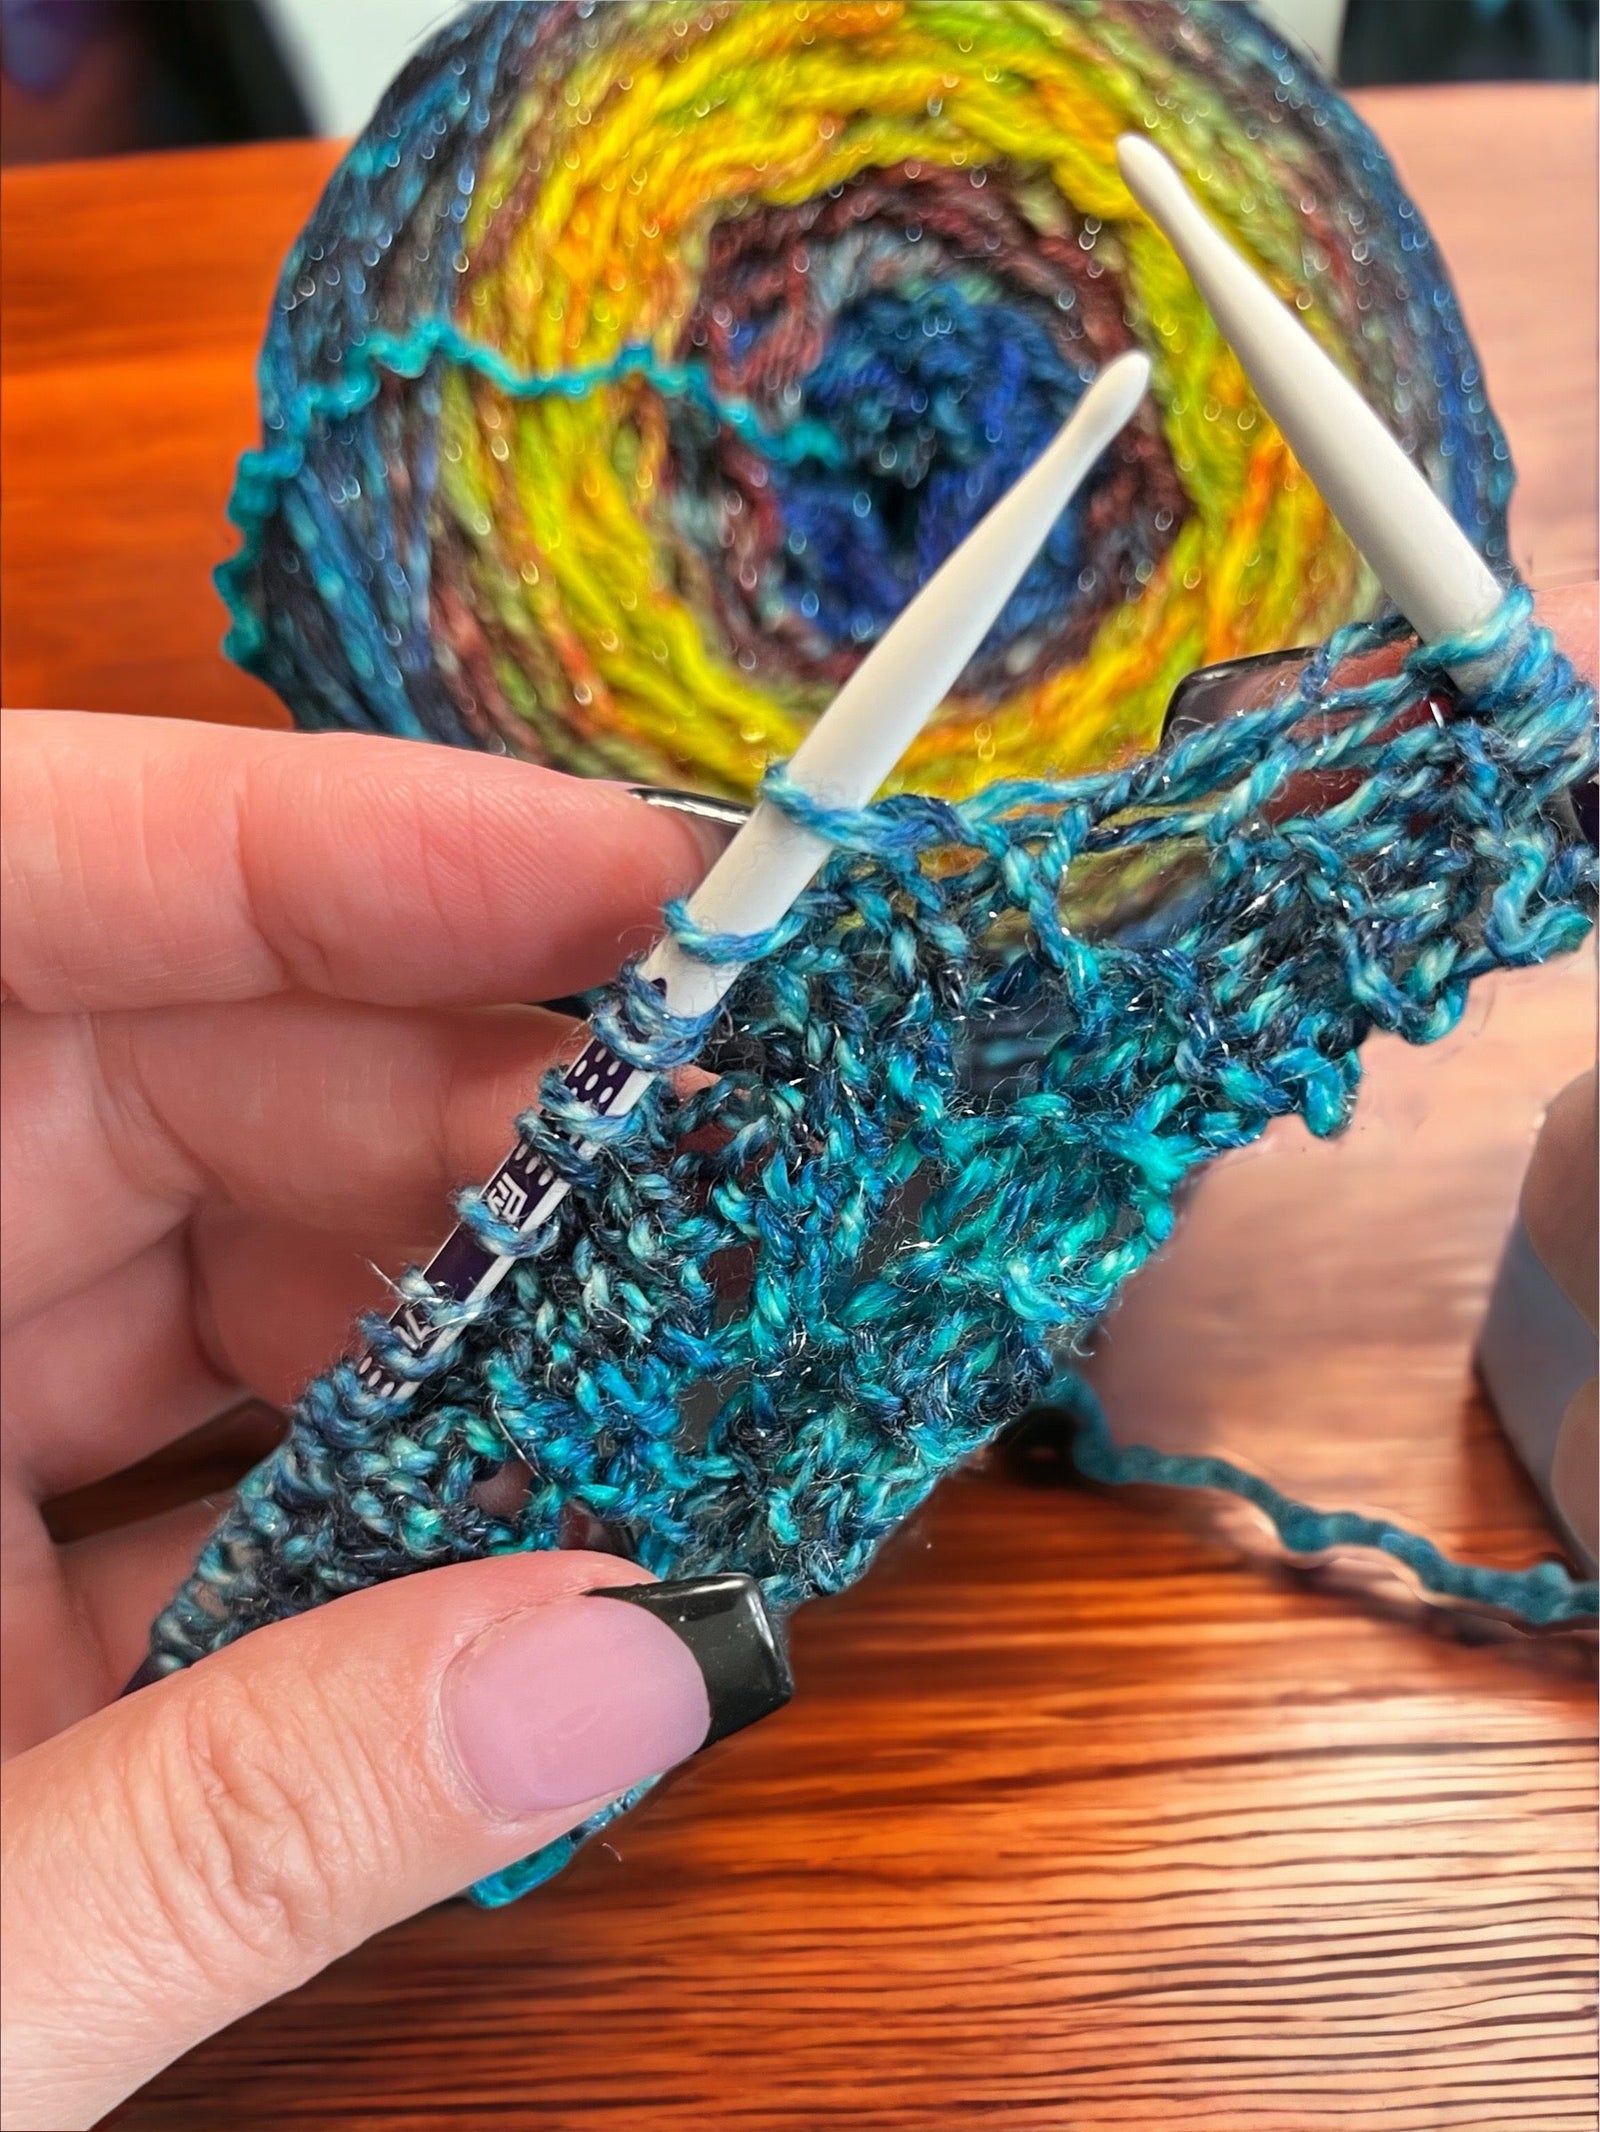 Wholesale Plastic Crochet Knitting Stitch Counter 